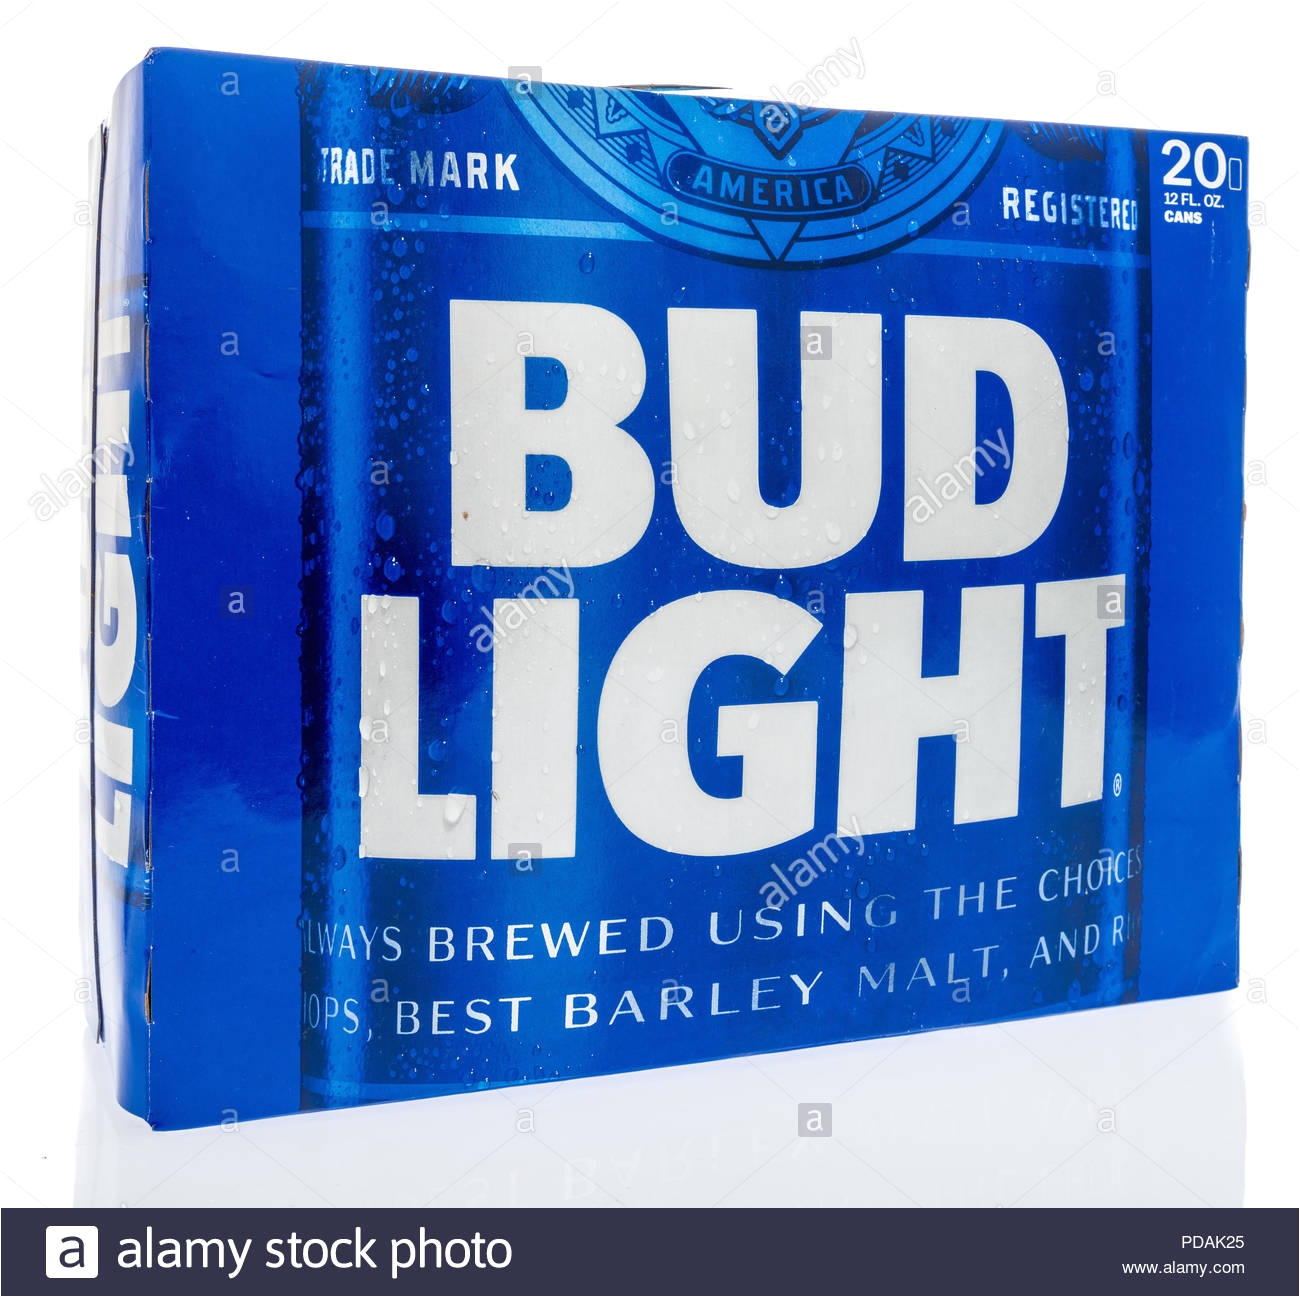 winneconne wi 7 august 2018 a case of bud light beer on an